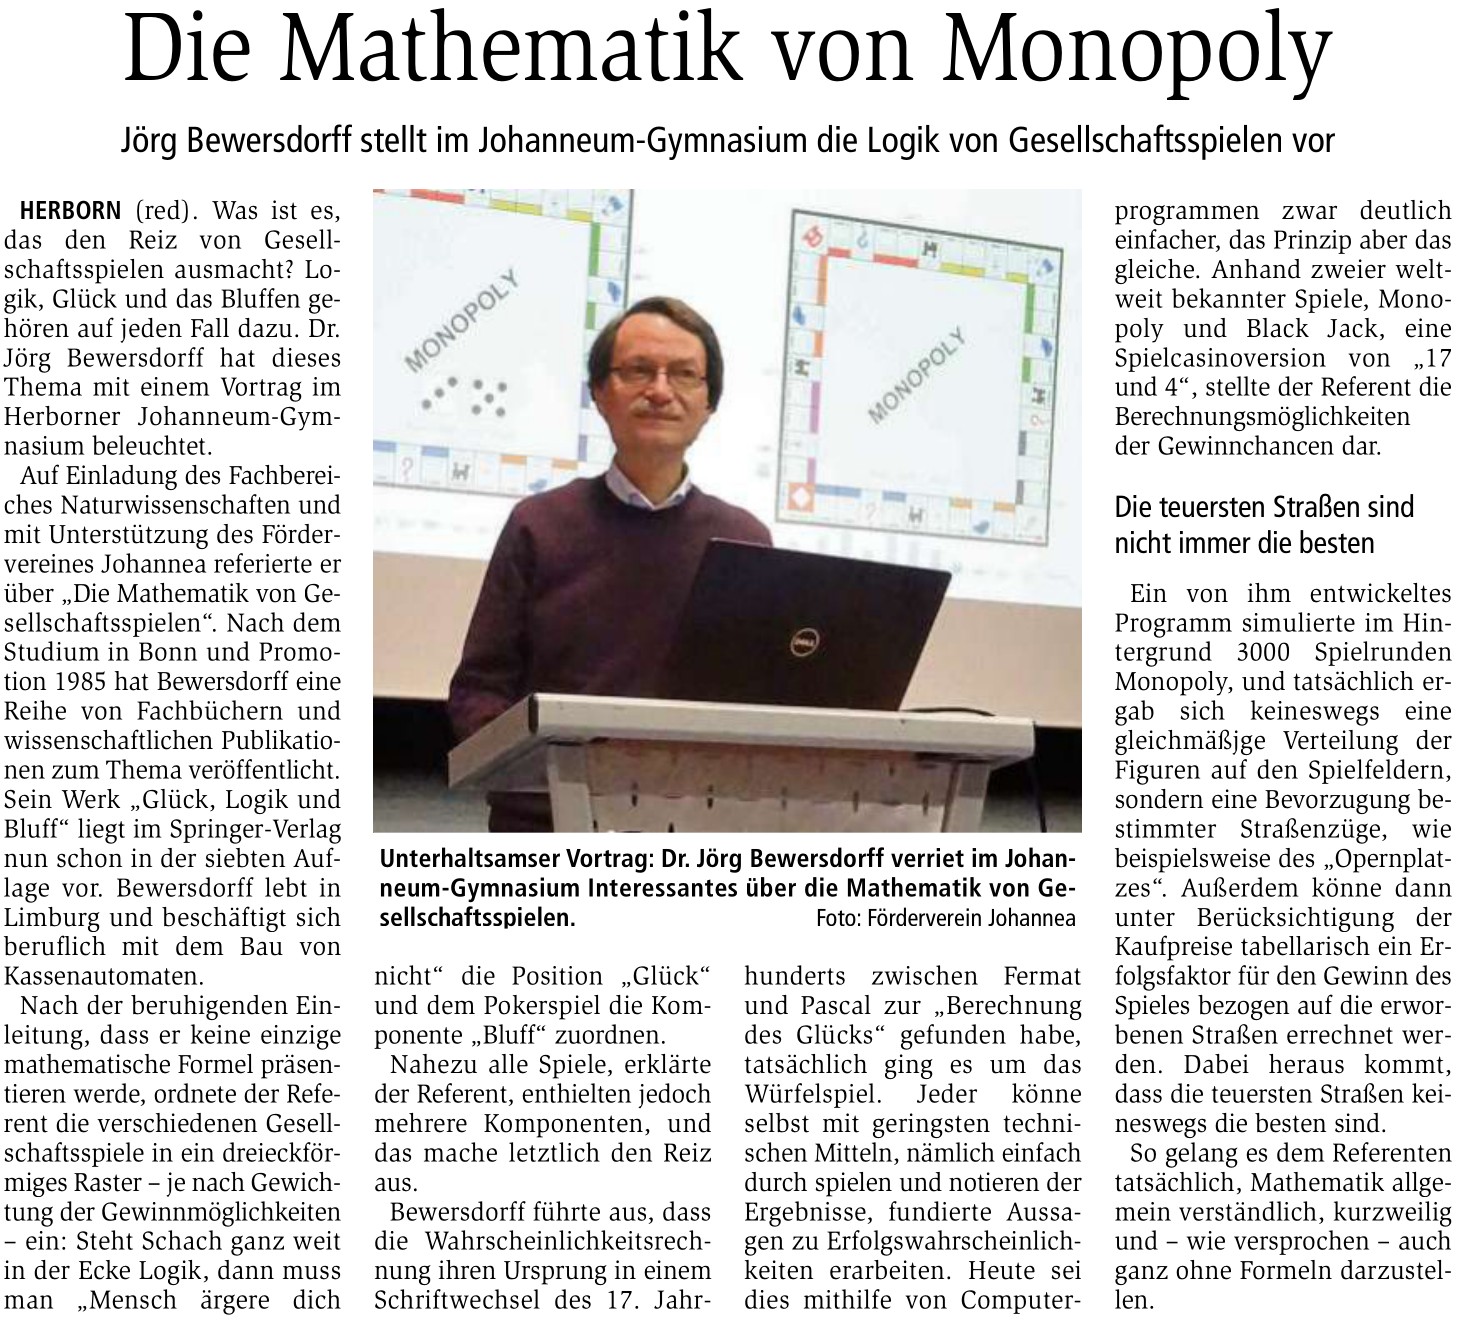 Mathematik von Monopoly